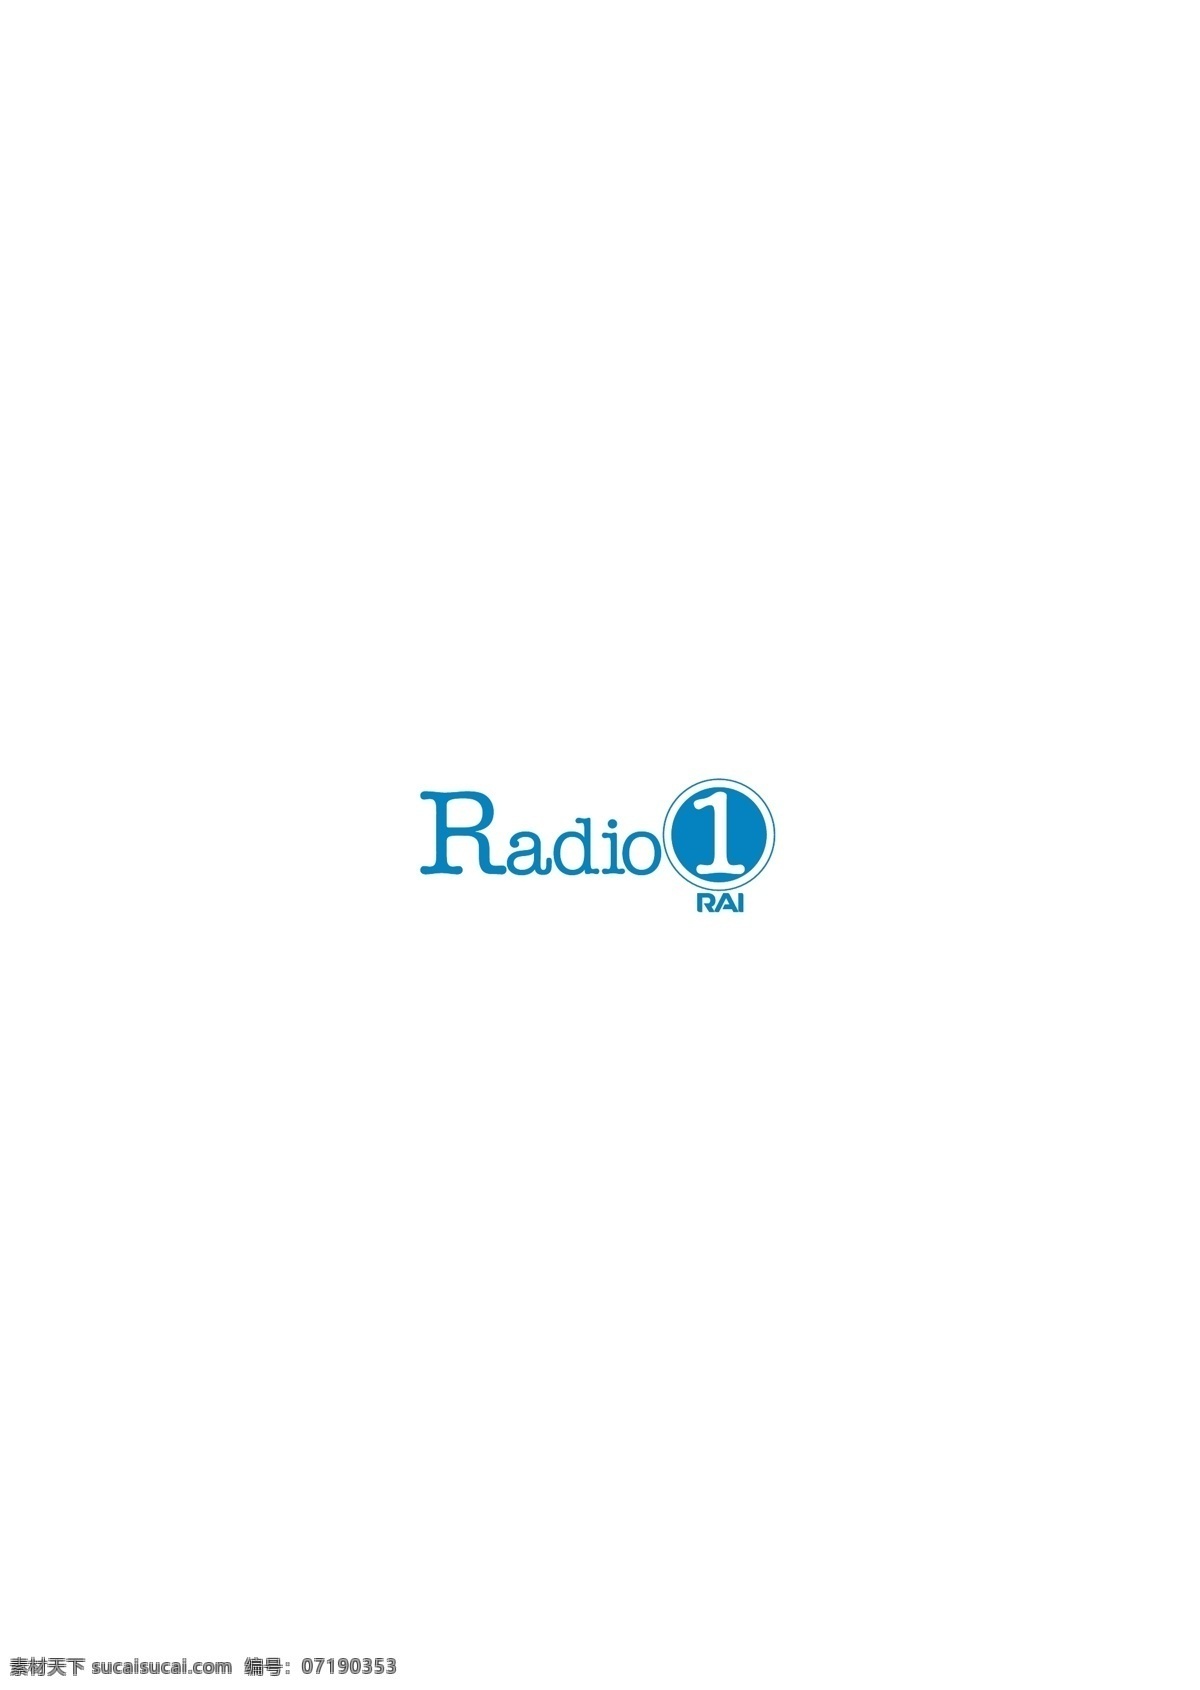 radio rai logo 设计欣赏 标志设计 欣赏 矢量下载 网页矢量 商业矢量 logo大全 红色